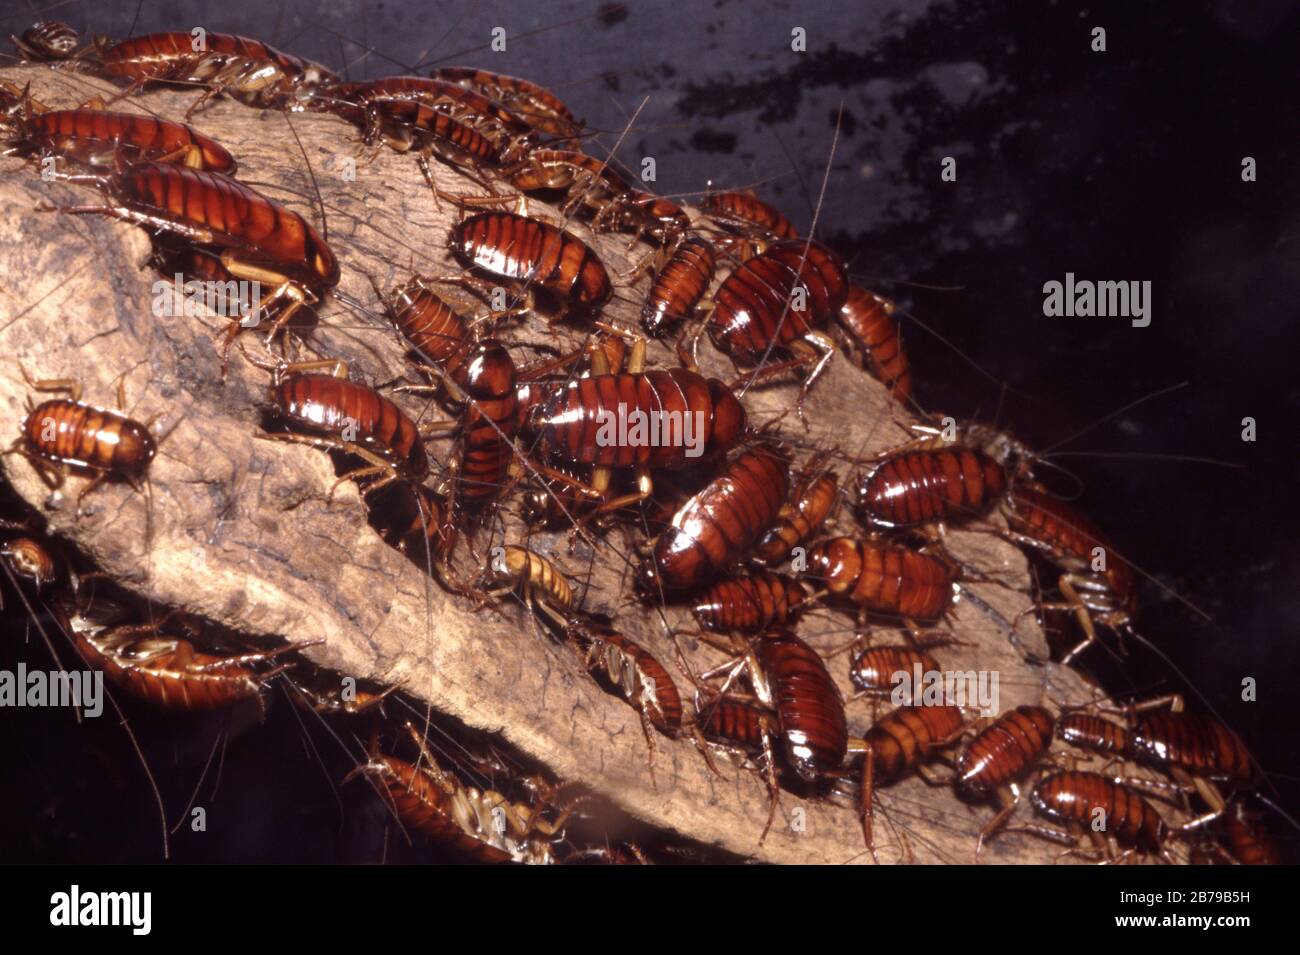 American cockroach, Periplaneta americana Stock Photo